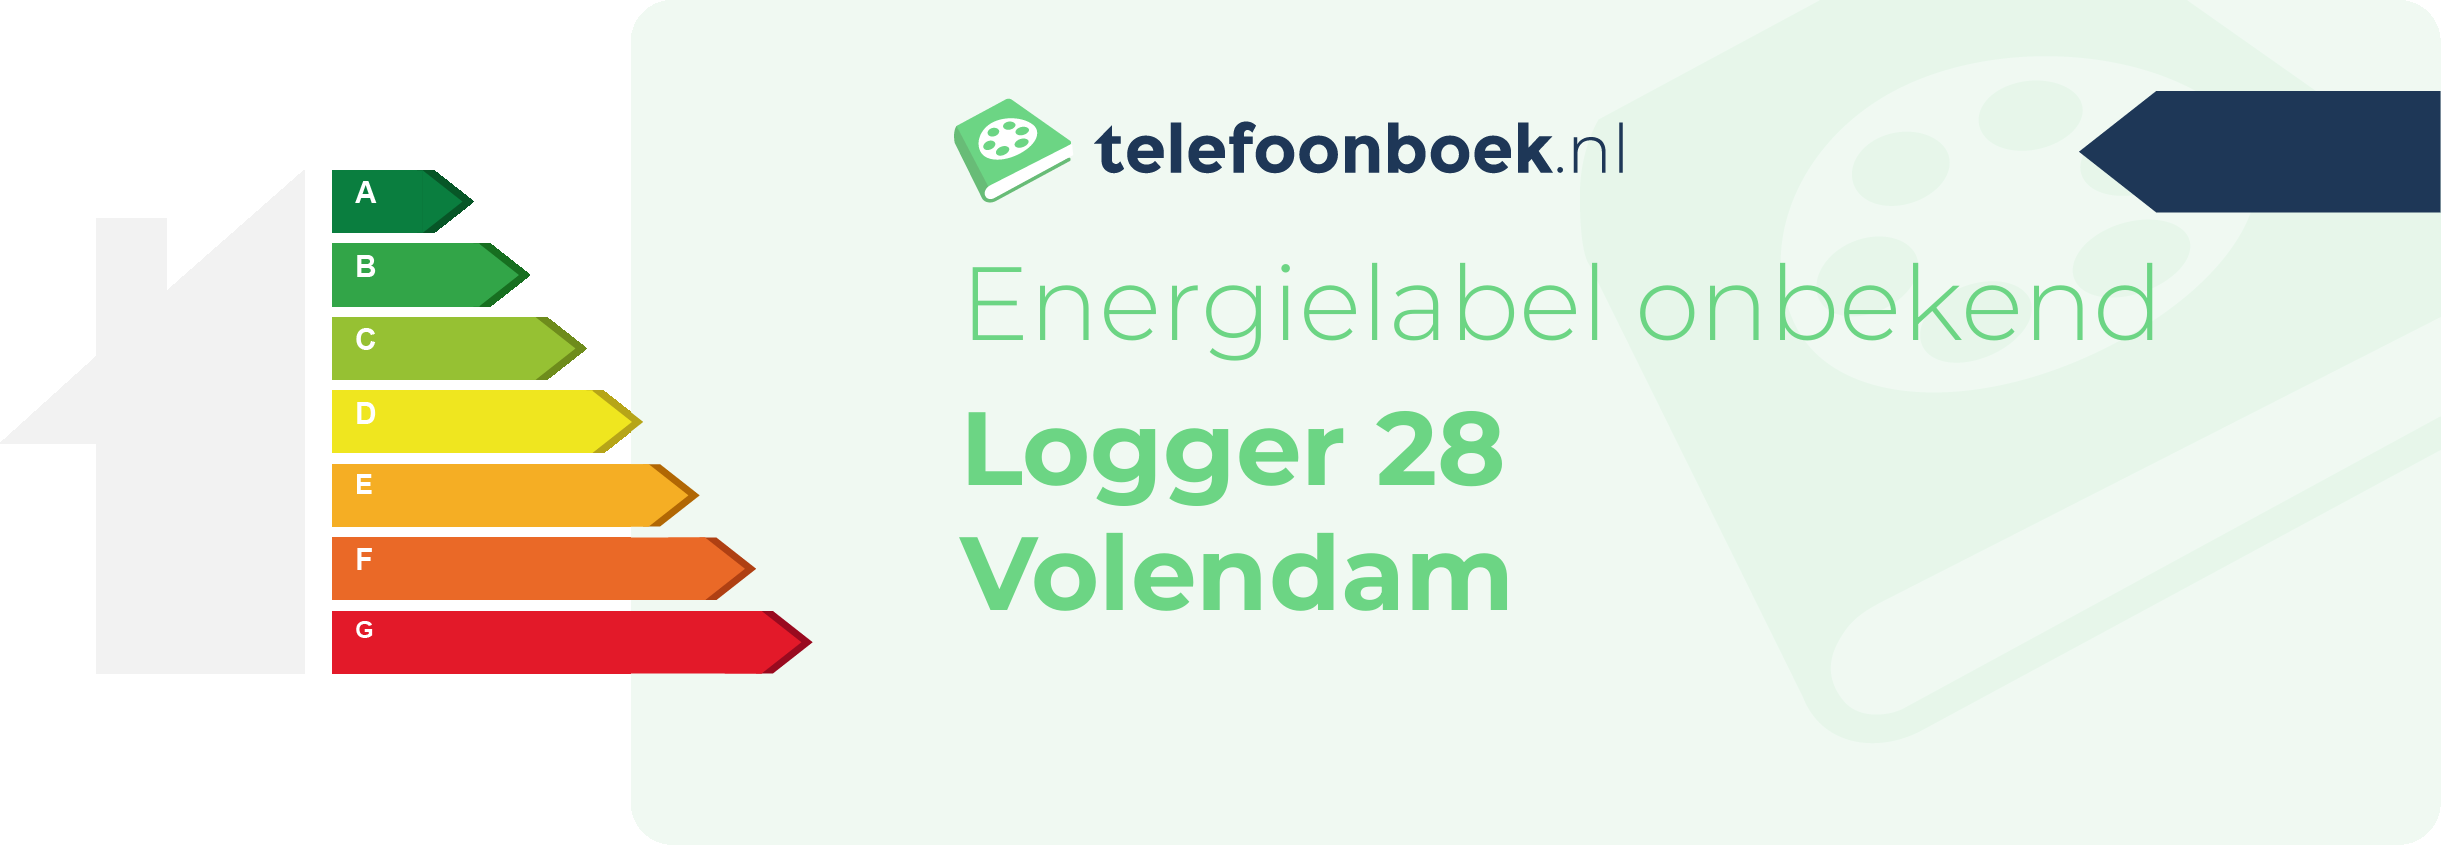 Energielabel Logger 28 Volendam